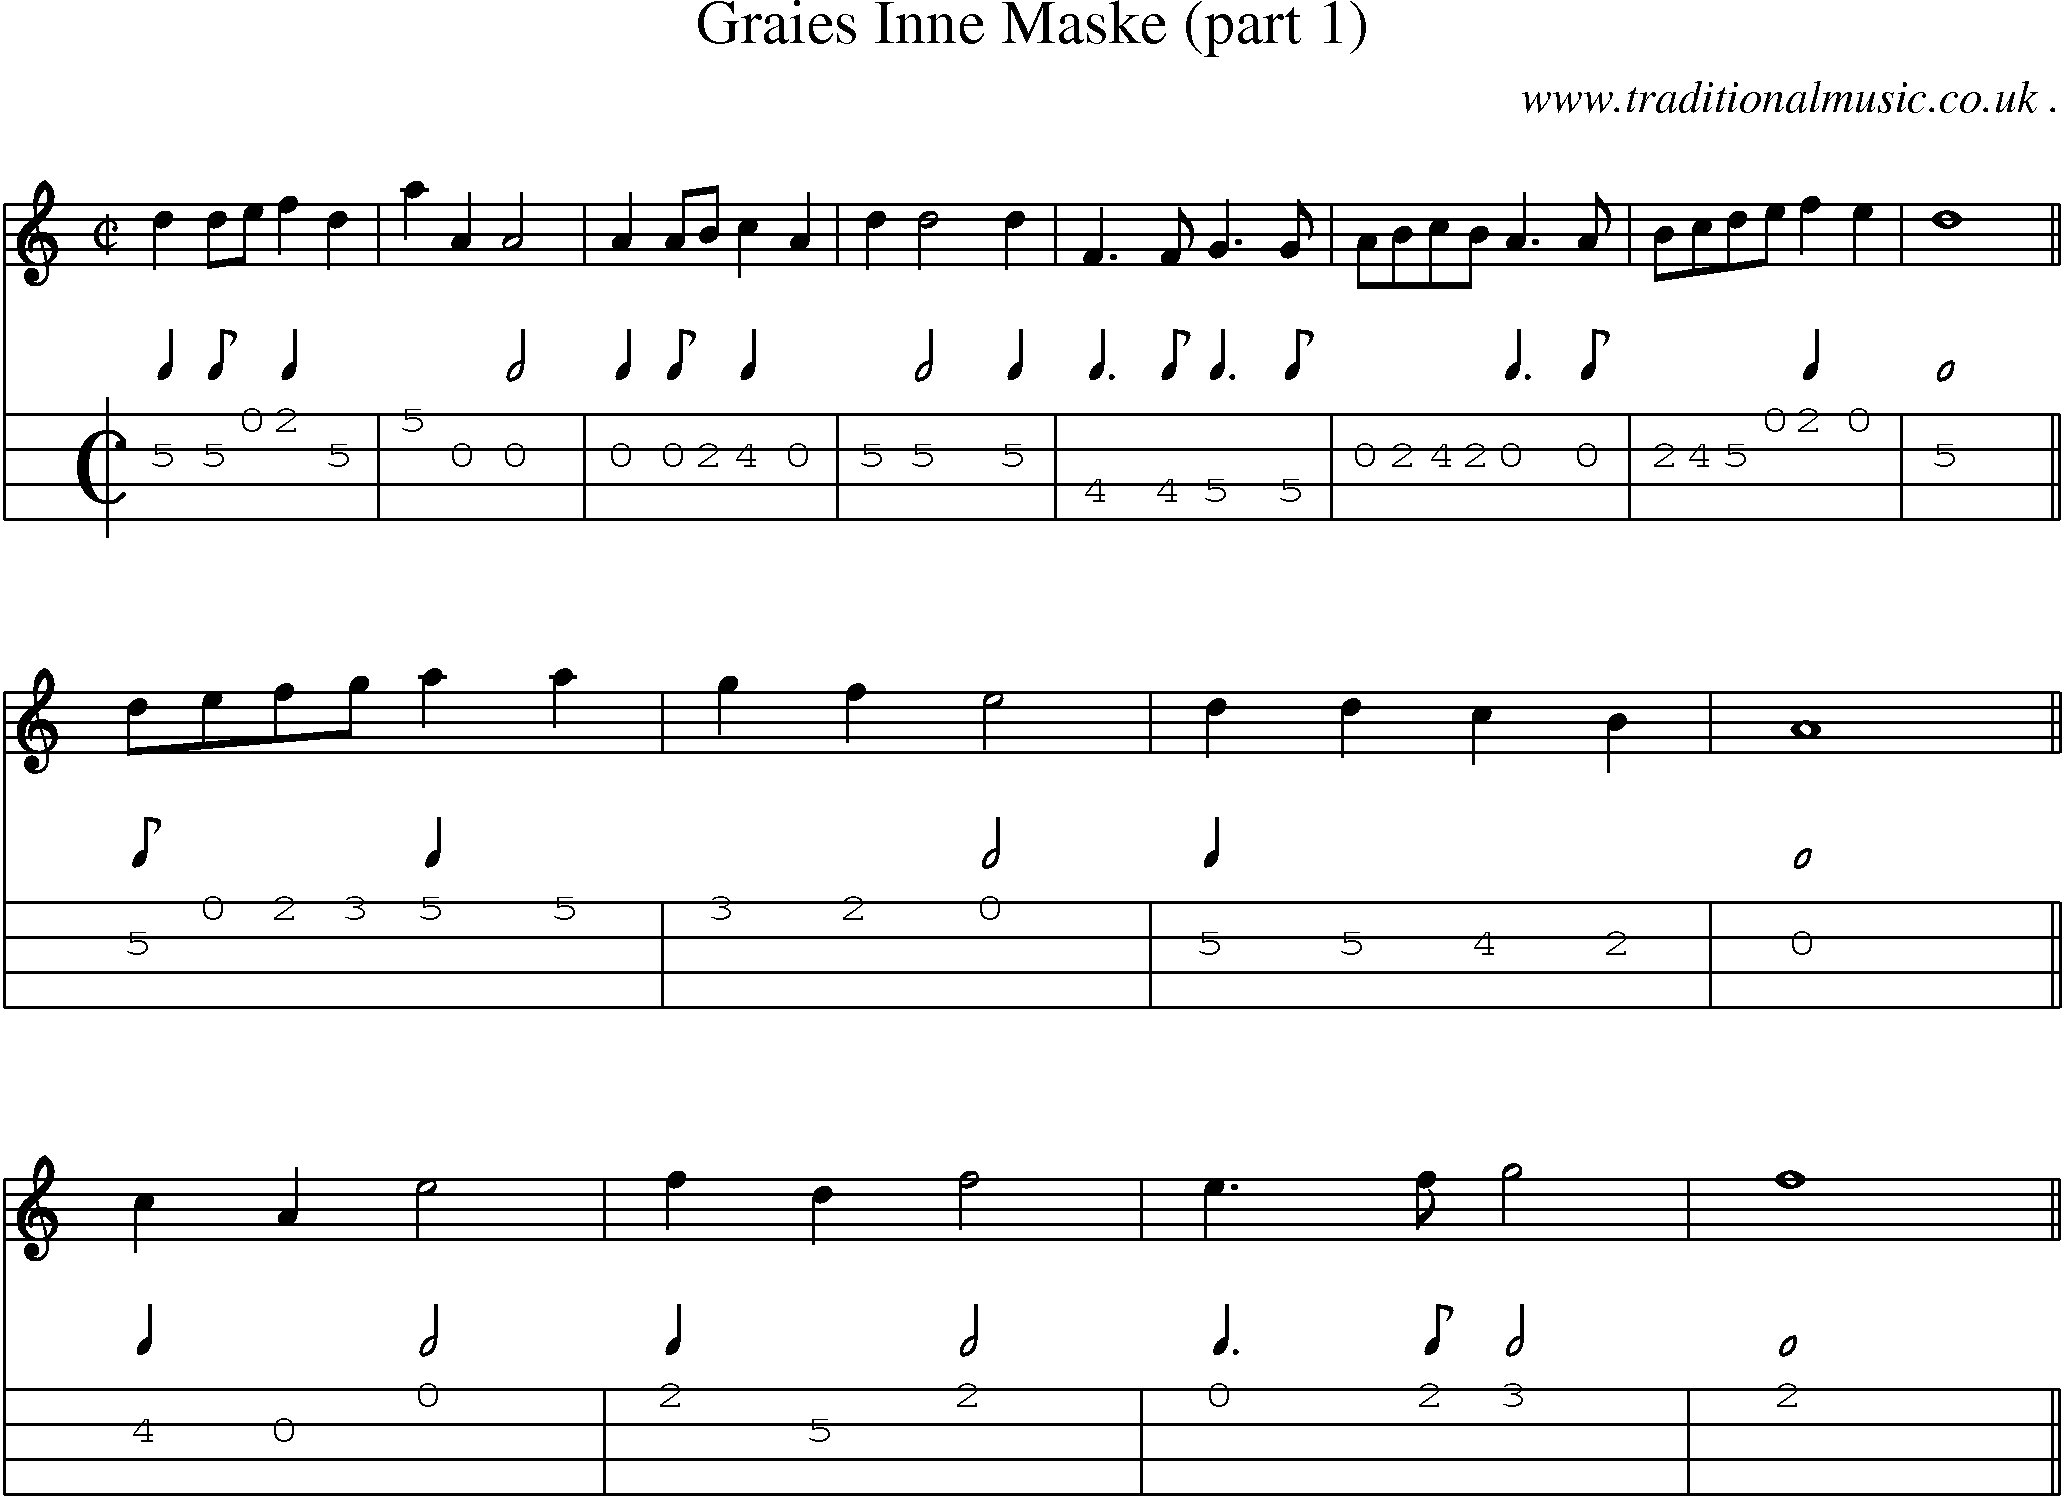 Sheet-Music and Mandolin Tabs for Graies Inne Maske (part 1)